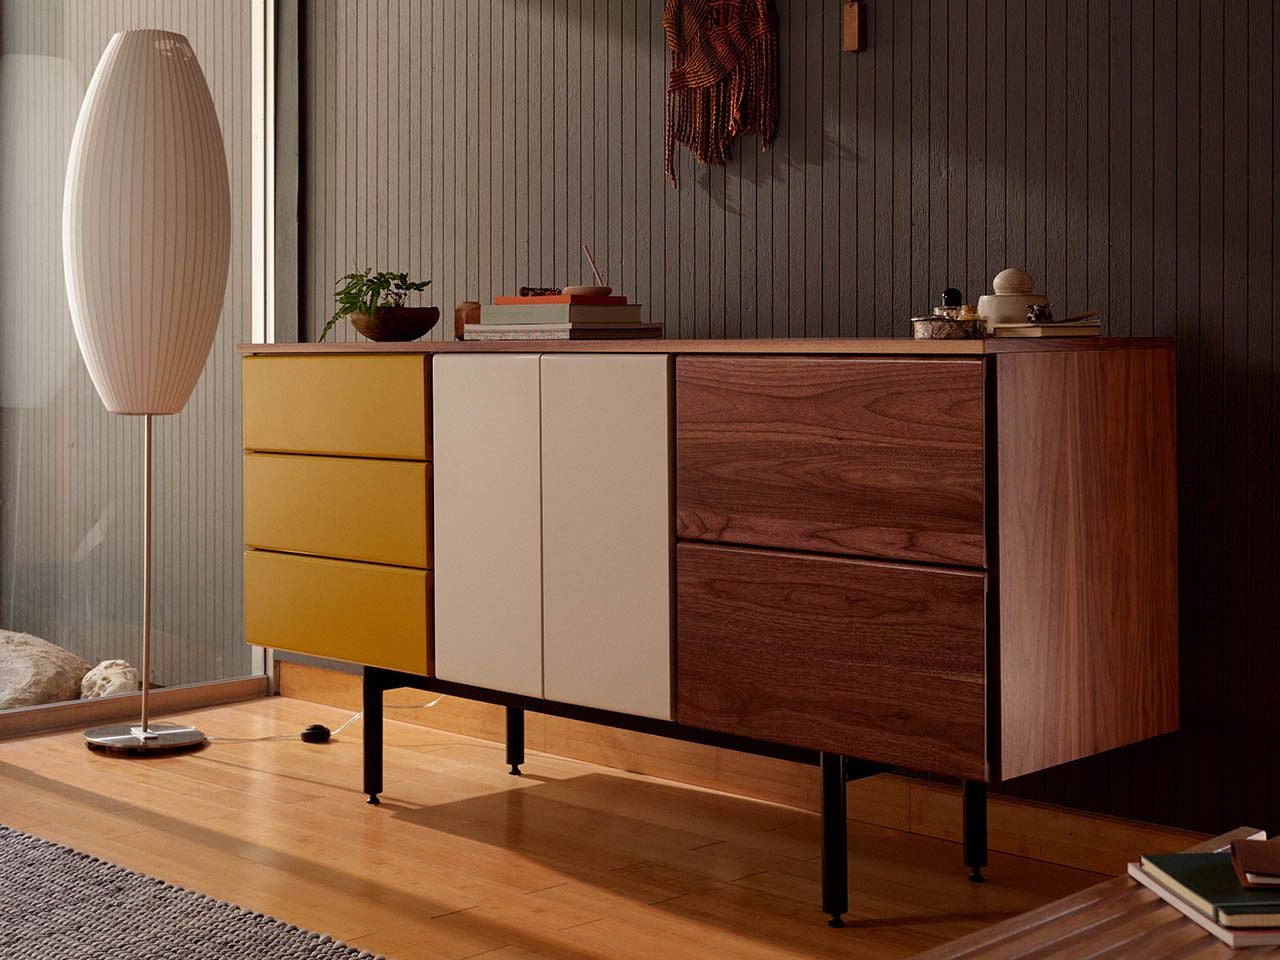 Three-unit version of Floyd Furniture's modular 